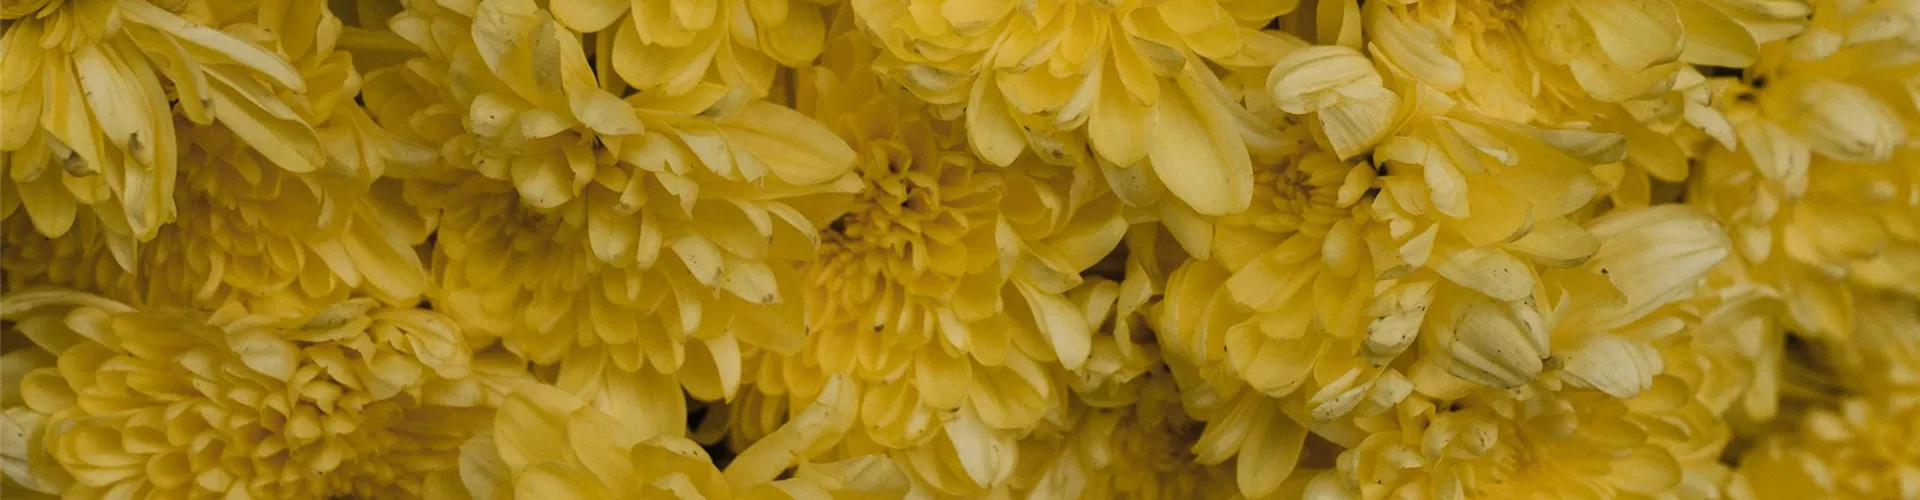 Chrysanthemen - Bellaflora